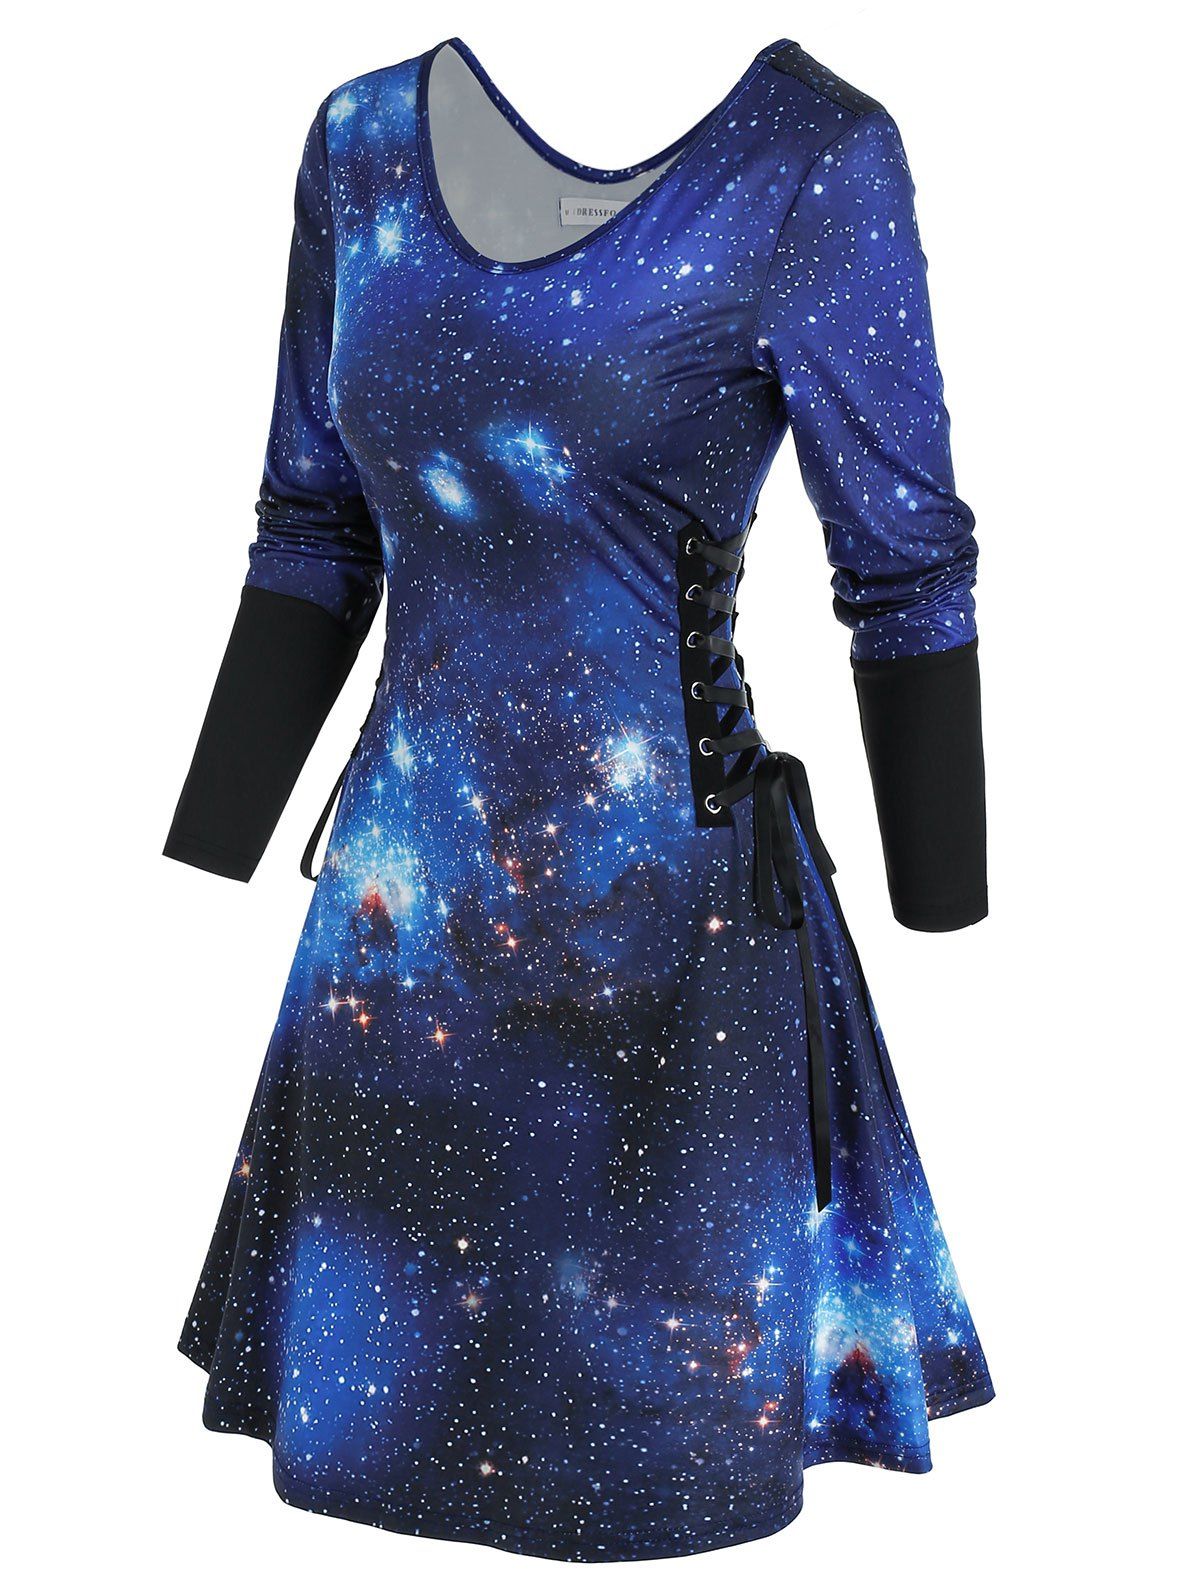 Galaxy Print Lace Up A Line Long Sleeve Dress - BLACK L